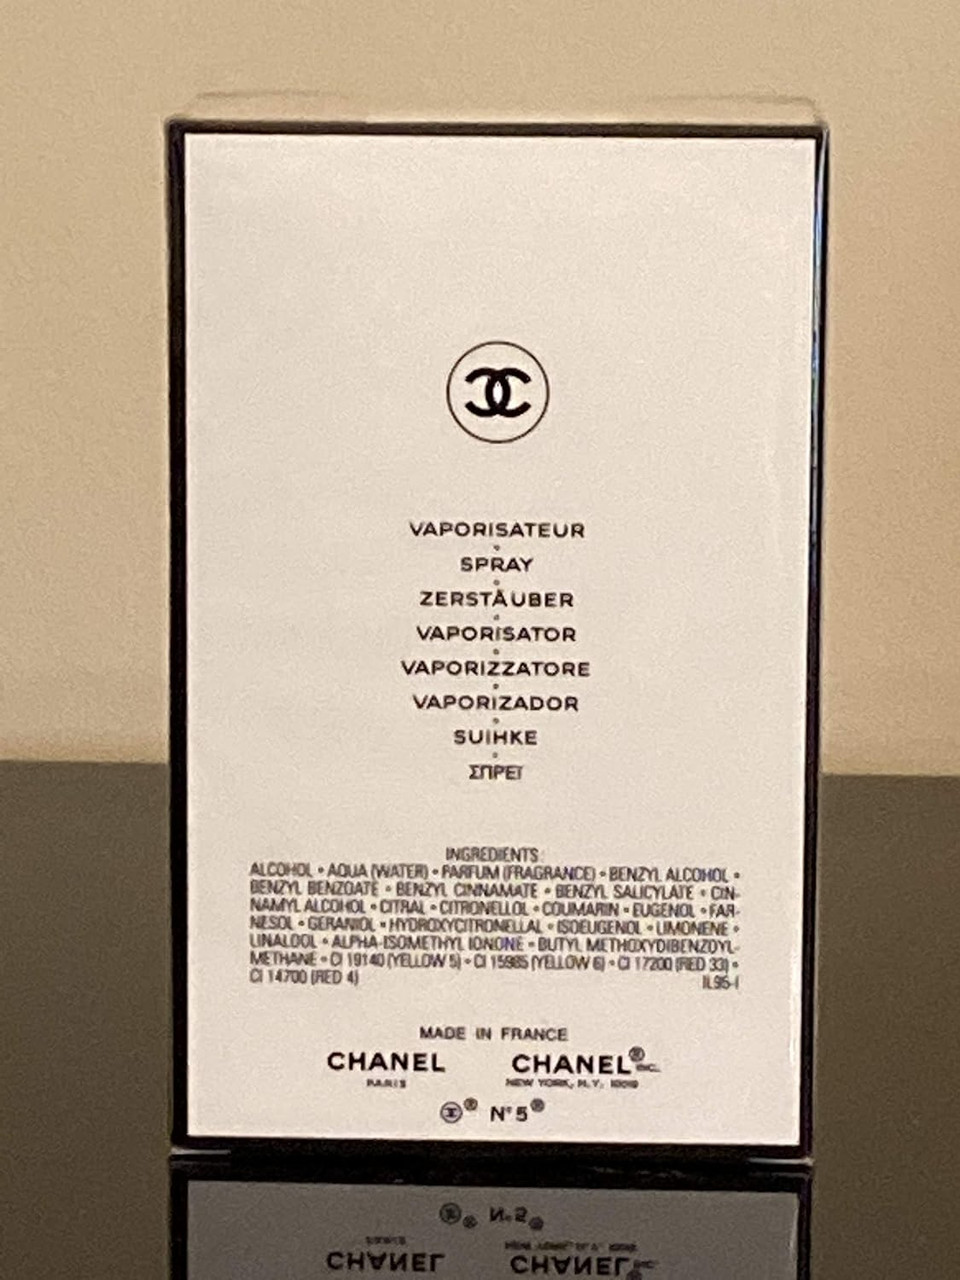 No. 5 by Chanel for Women, Eau De Parfum Spray, 3.4 Ounce